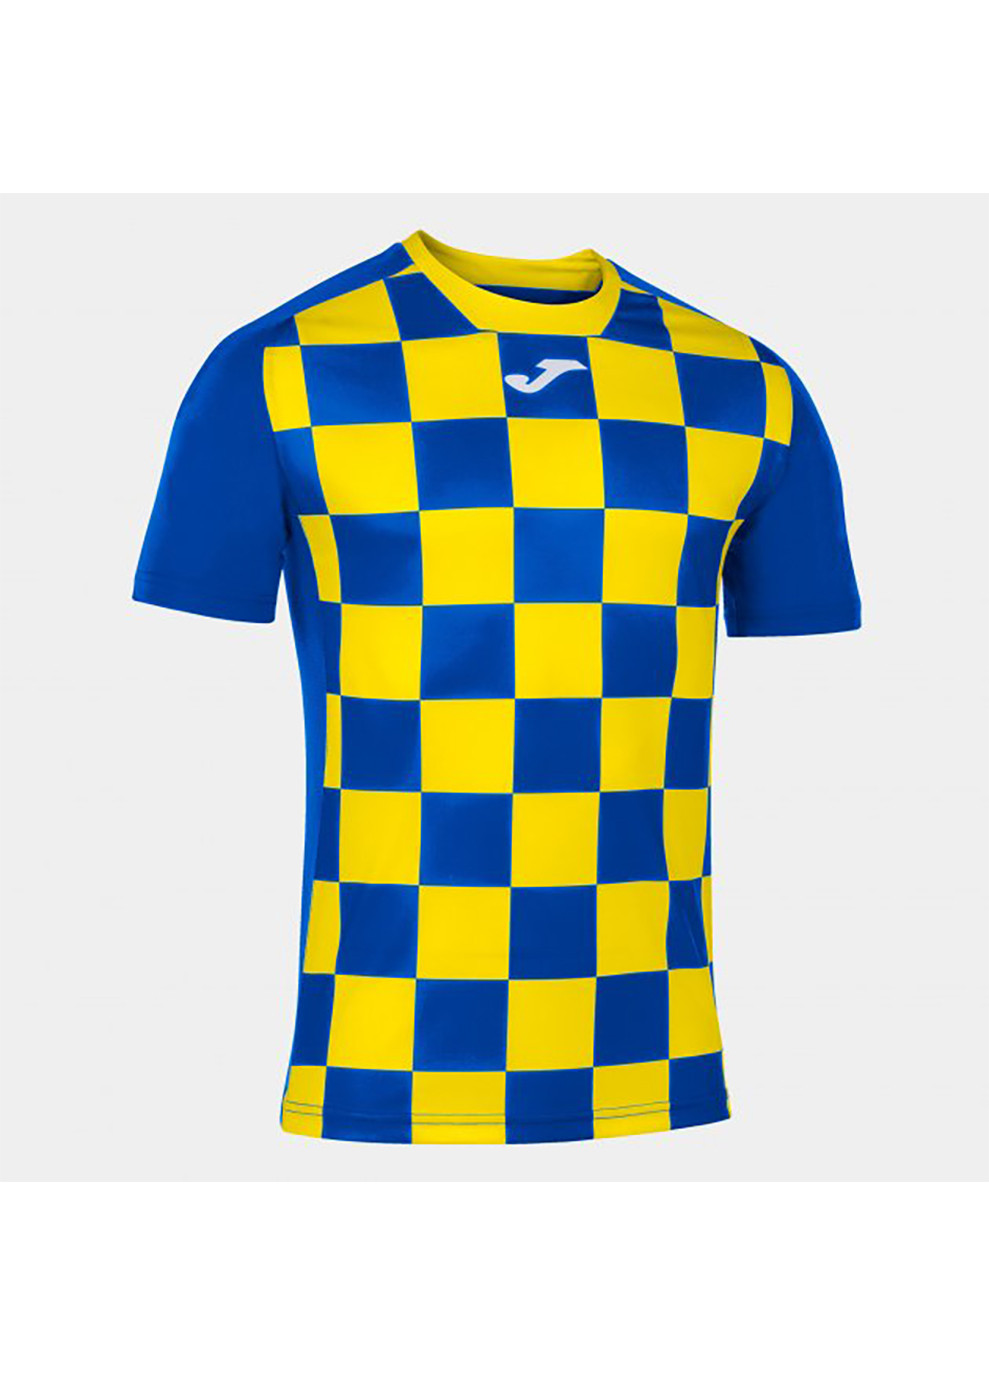 Комбинированная футболка flag ii t-shirt royal-yellow s/s желтый,синий 101465bv.709 Joma